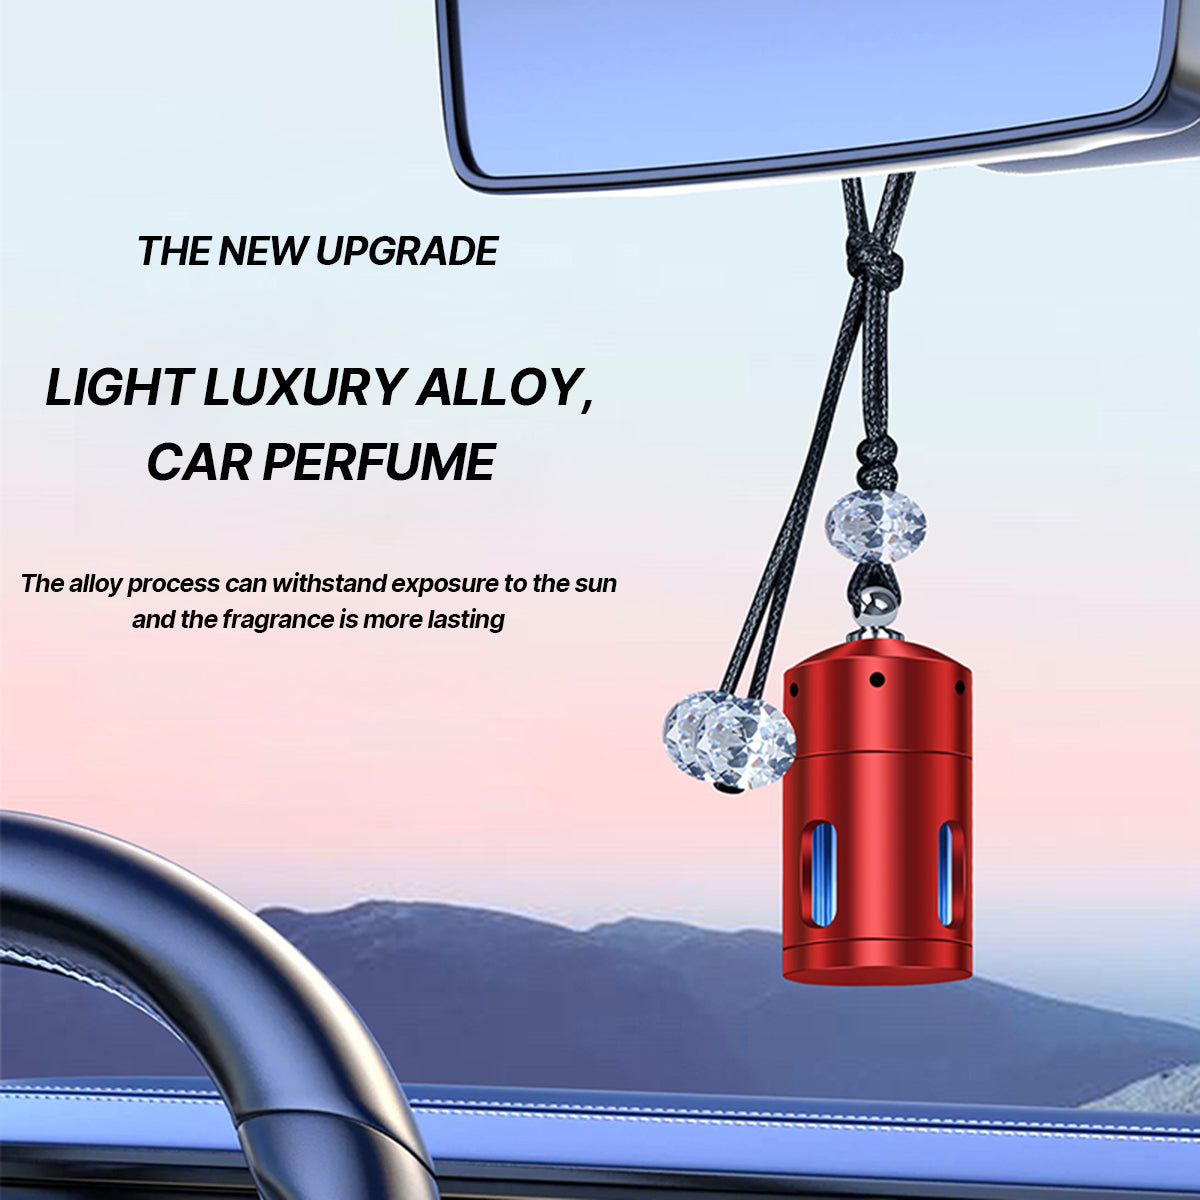 Luxuoso carro aromaterapia espelho retrovisor pendente purificador de ar para todos os veículos modelo 3 / s / x / y novo modelo 3 highland